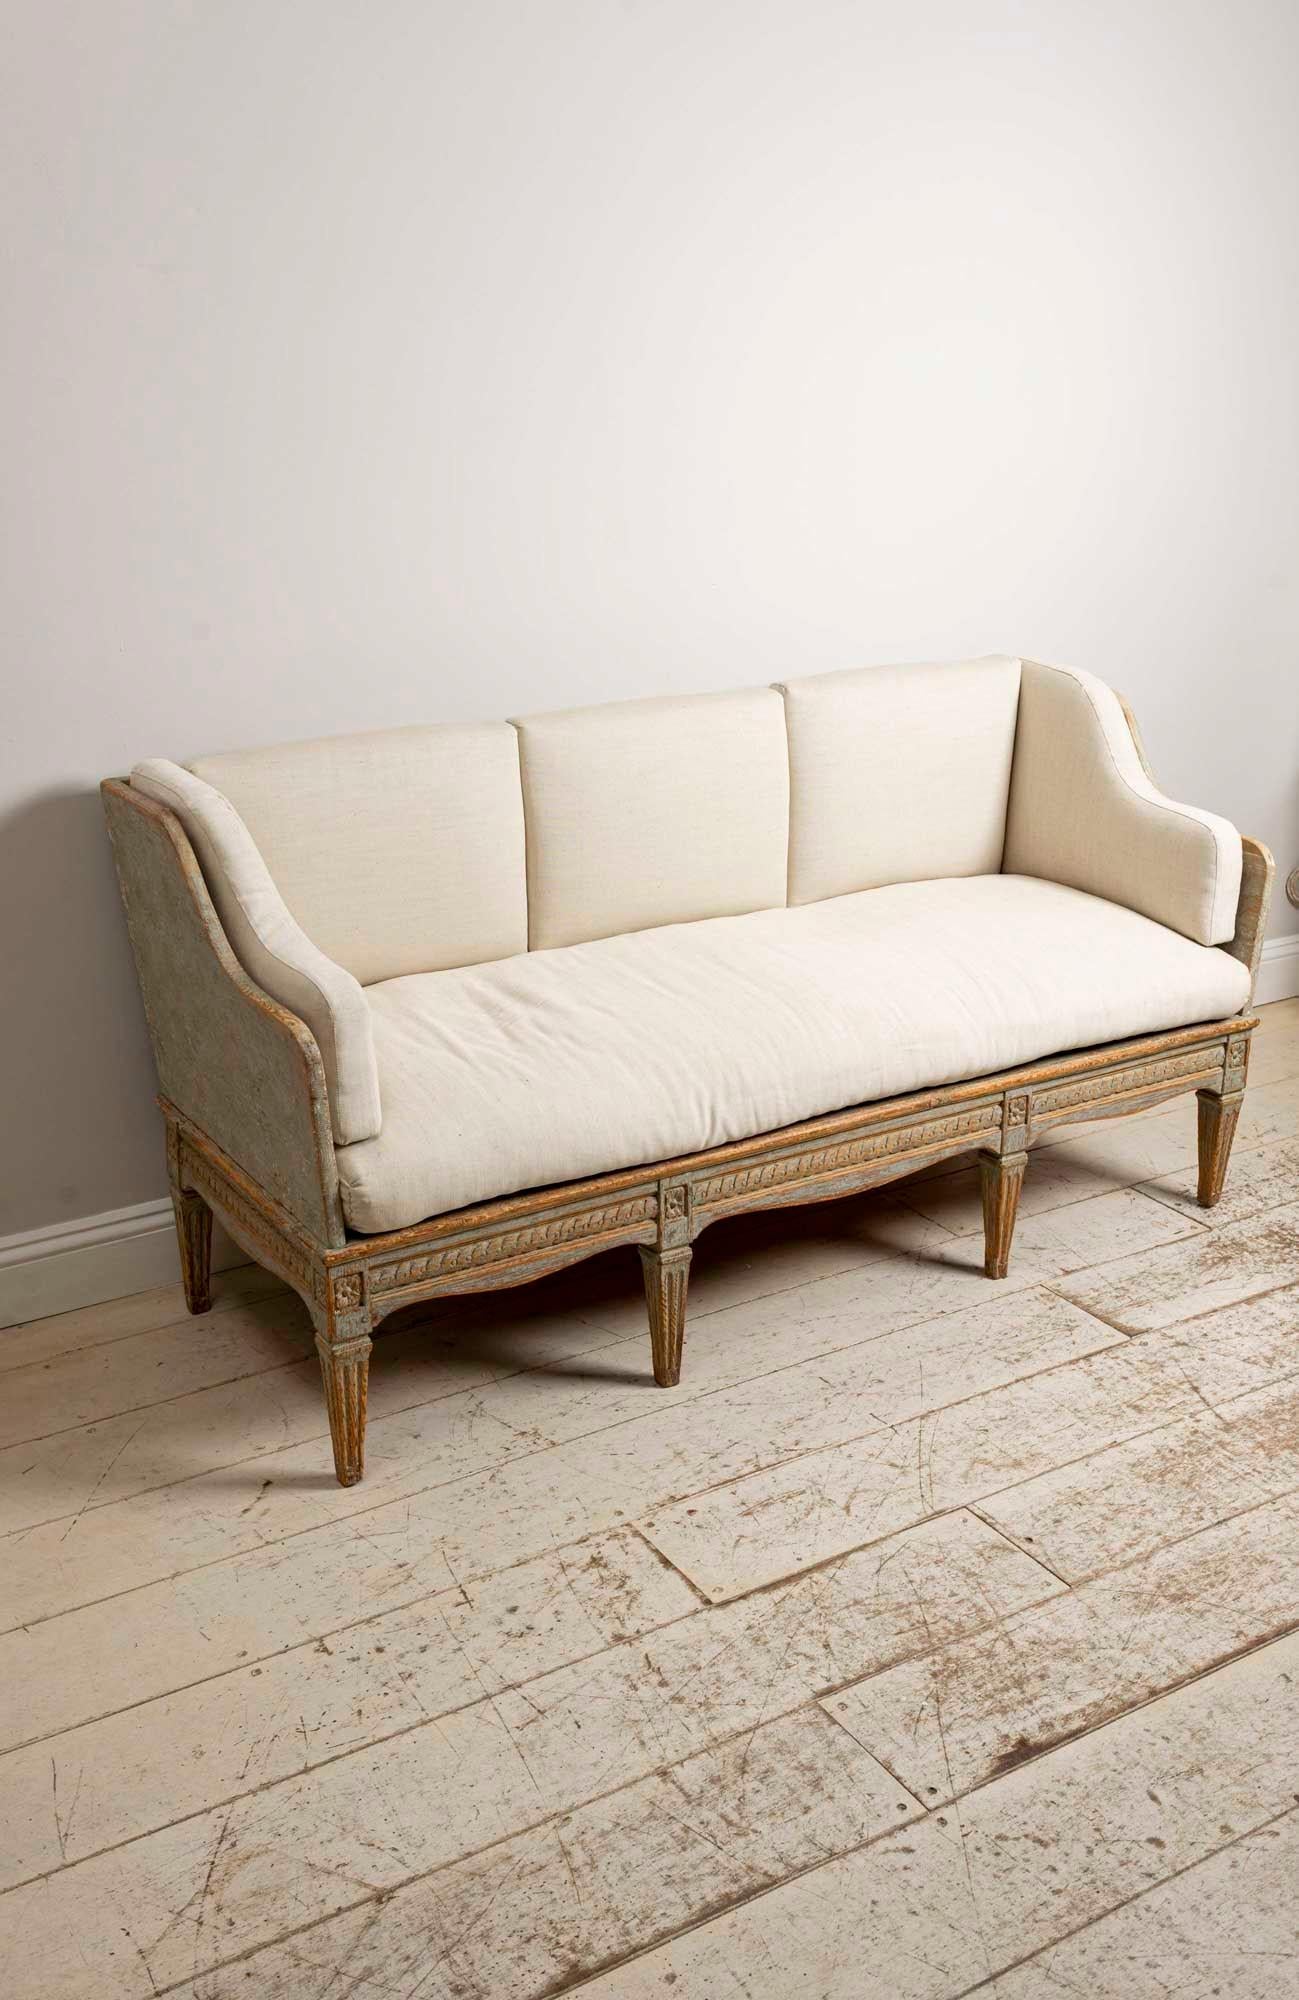 19th Century Swedish Gustavian Painted Gustavian Trag Sofa with Original Paint 1